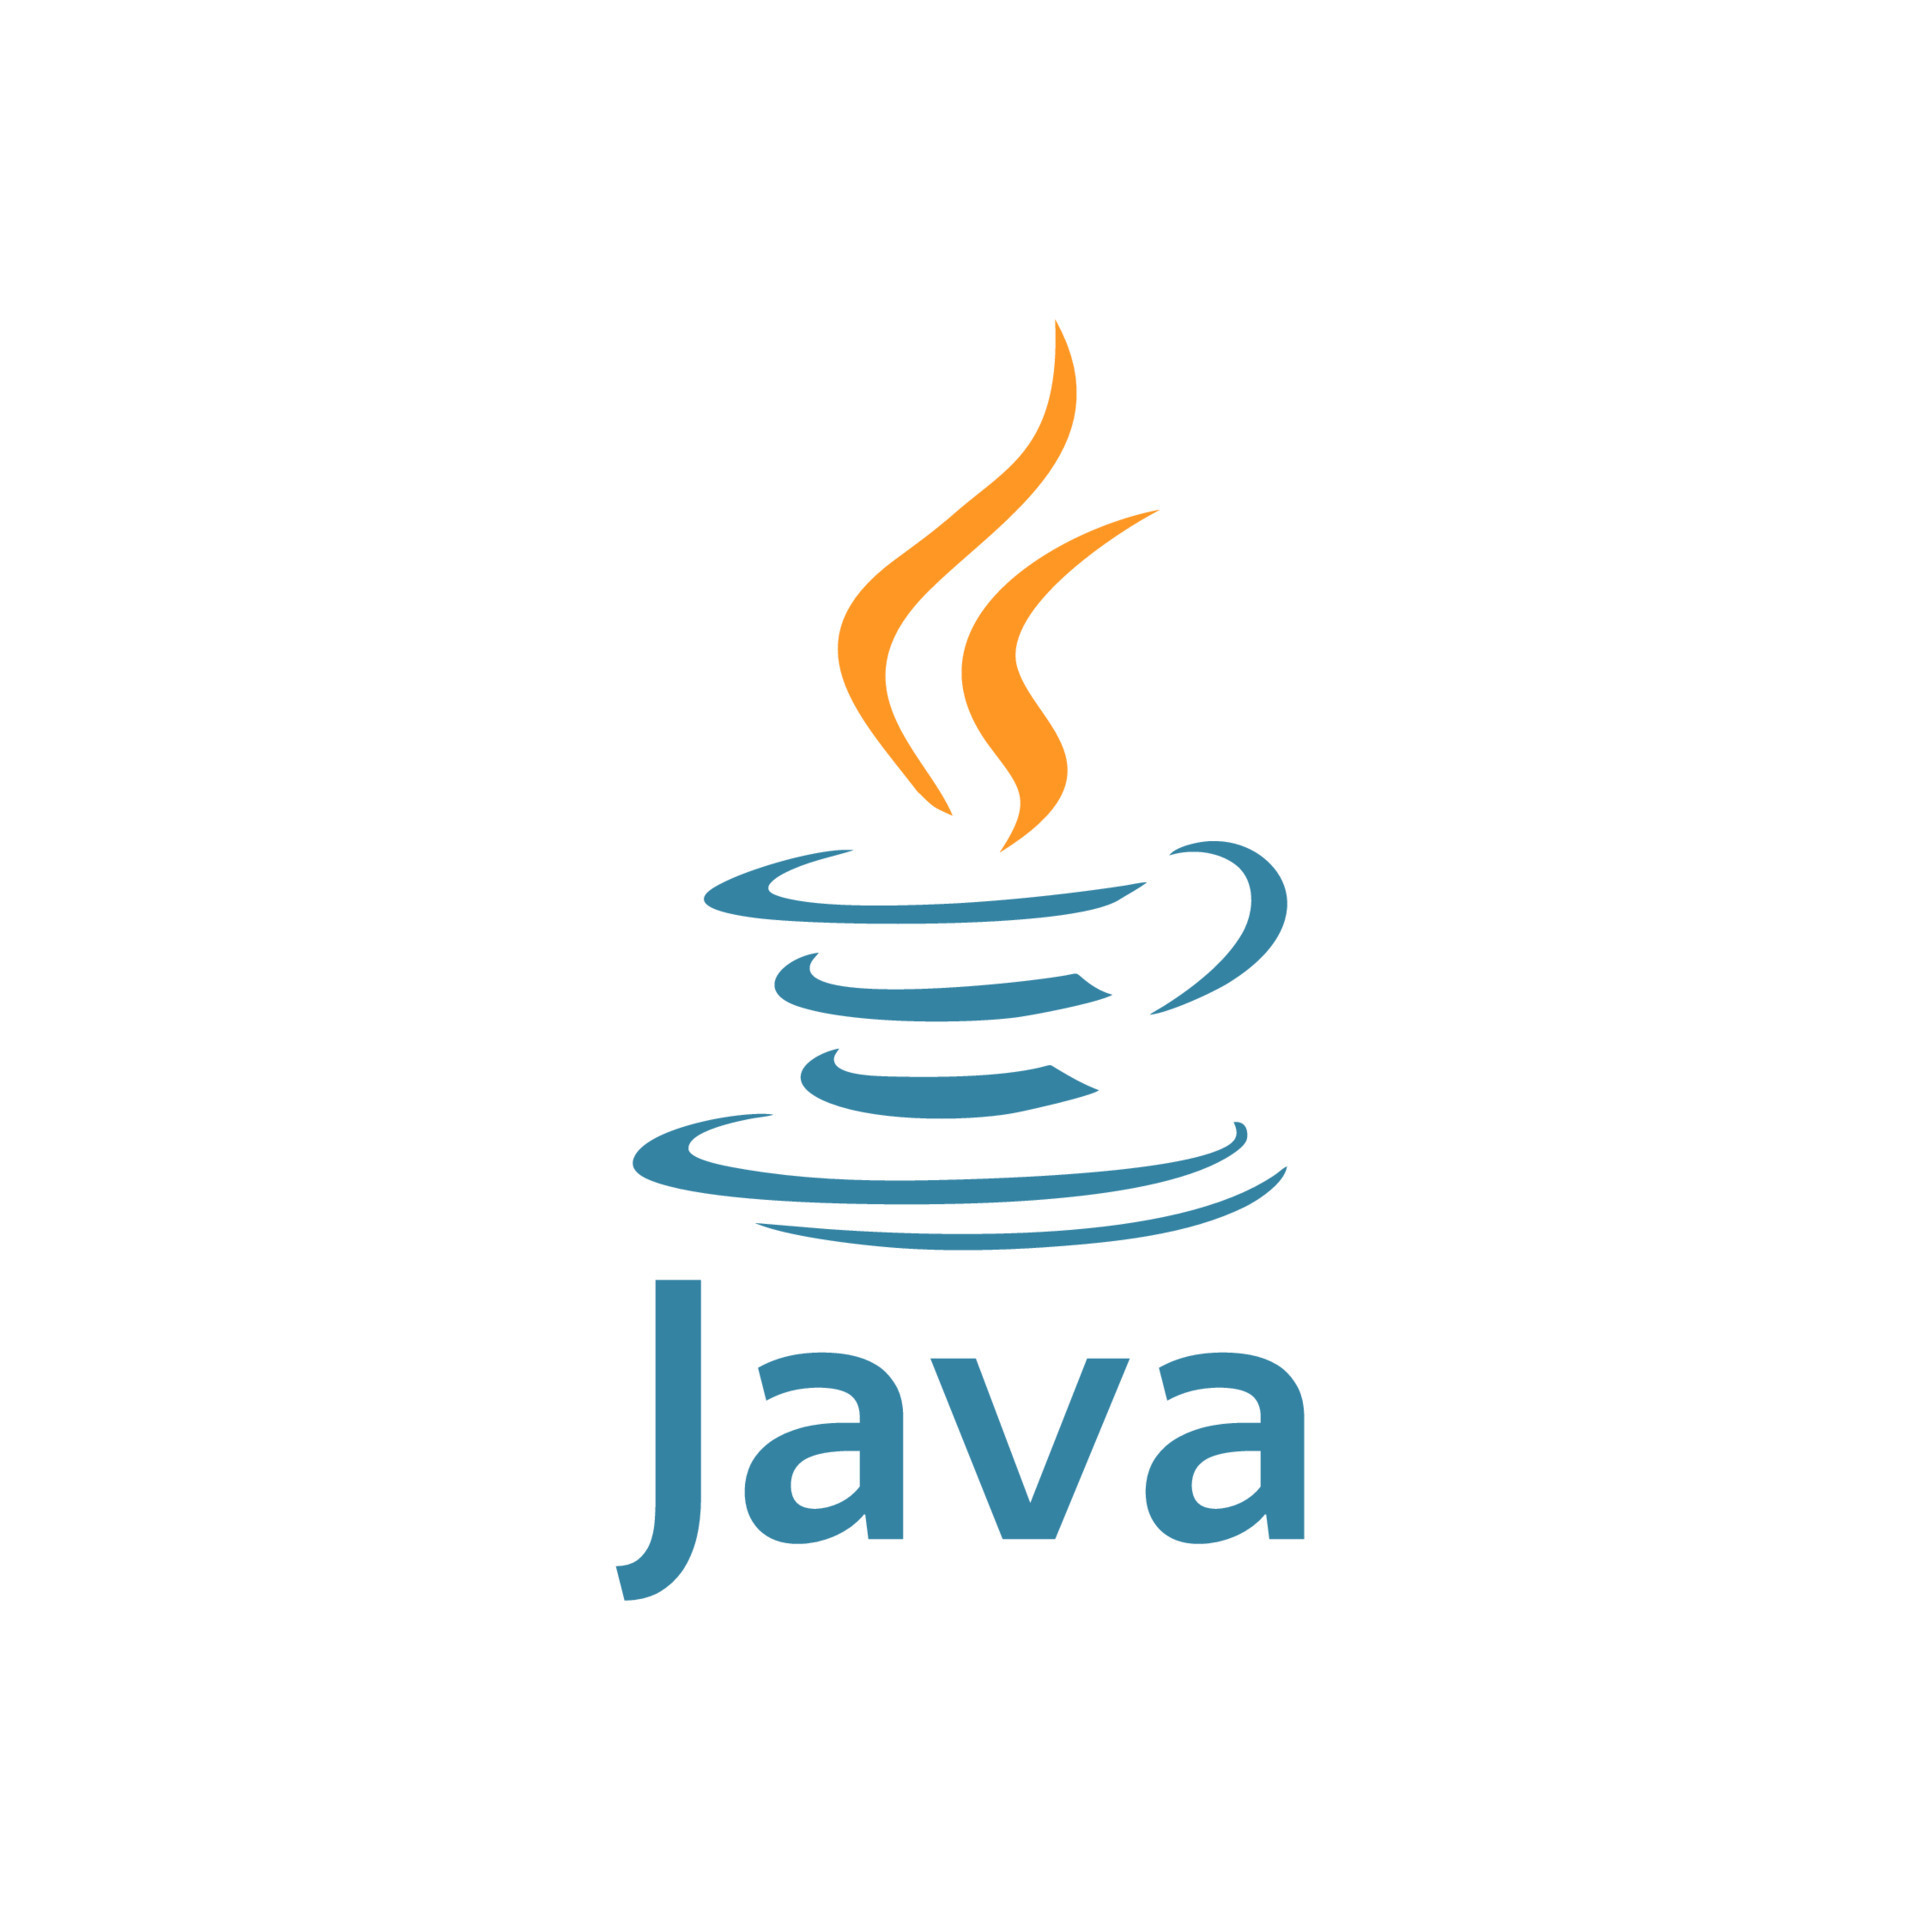 What Is Java Virtual Machine